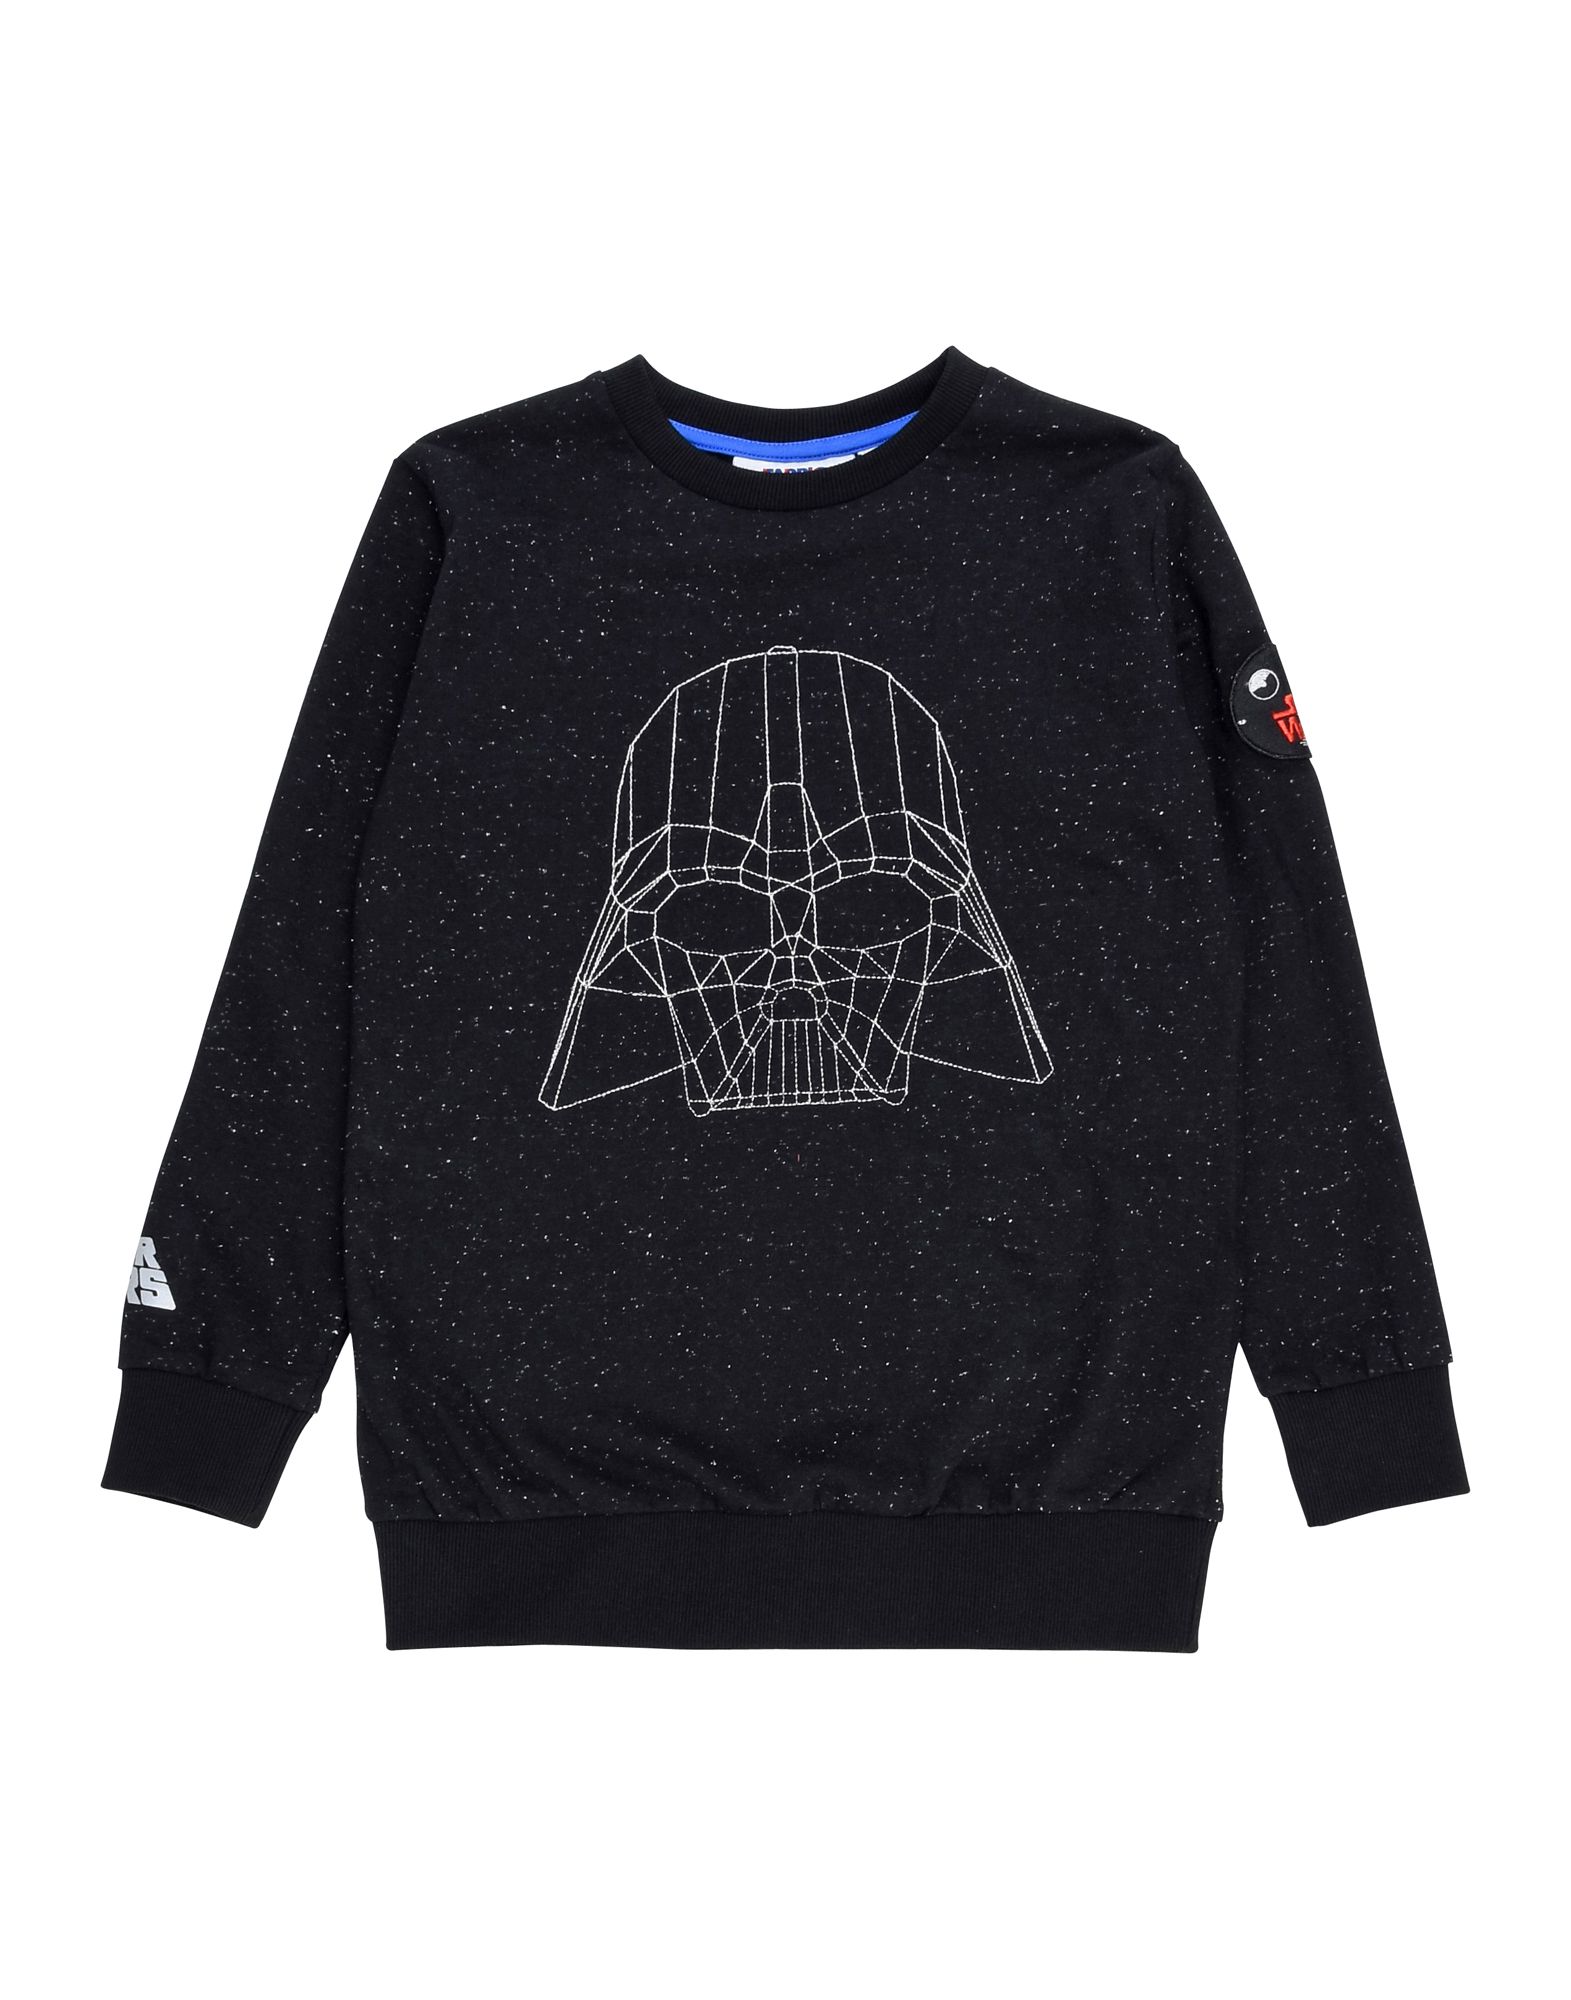 FABRIC FLAVOURS Darth Vader Galaxy Sweatshirt